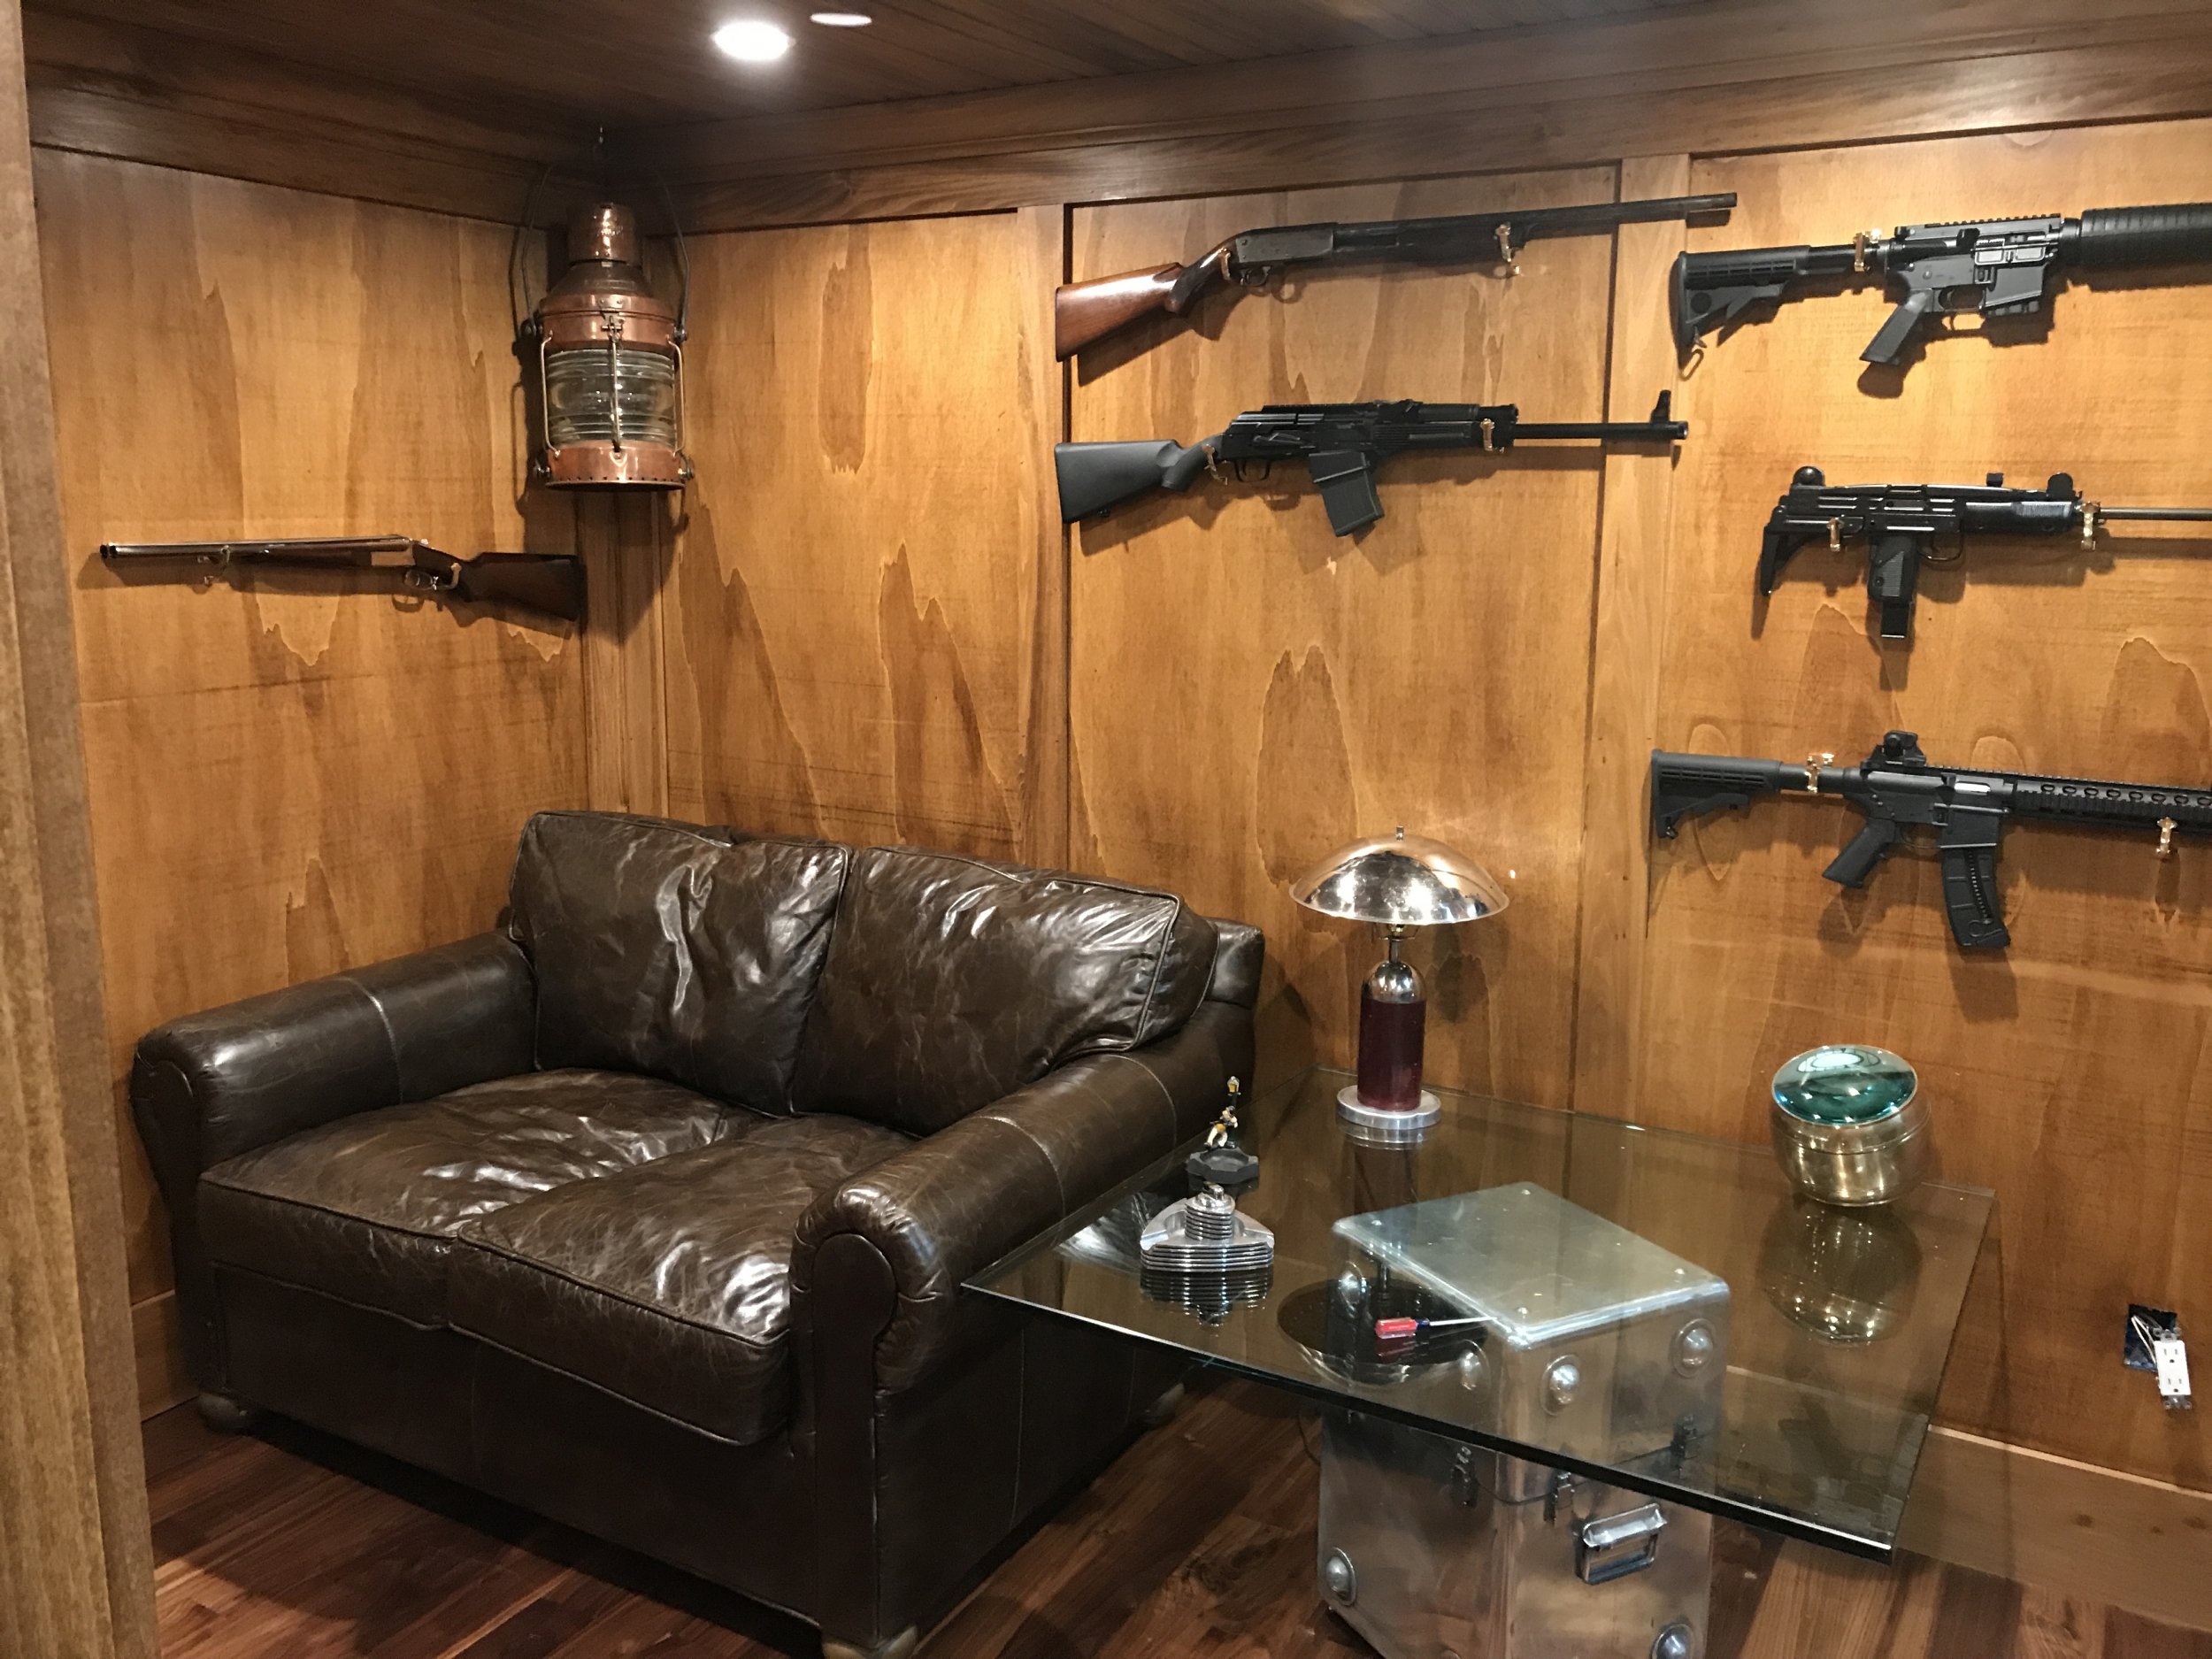 Machine Gun On Stand In Living Room